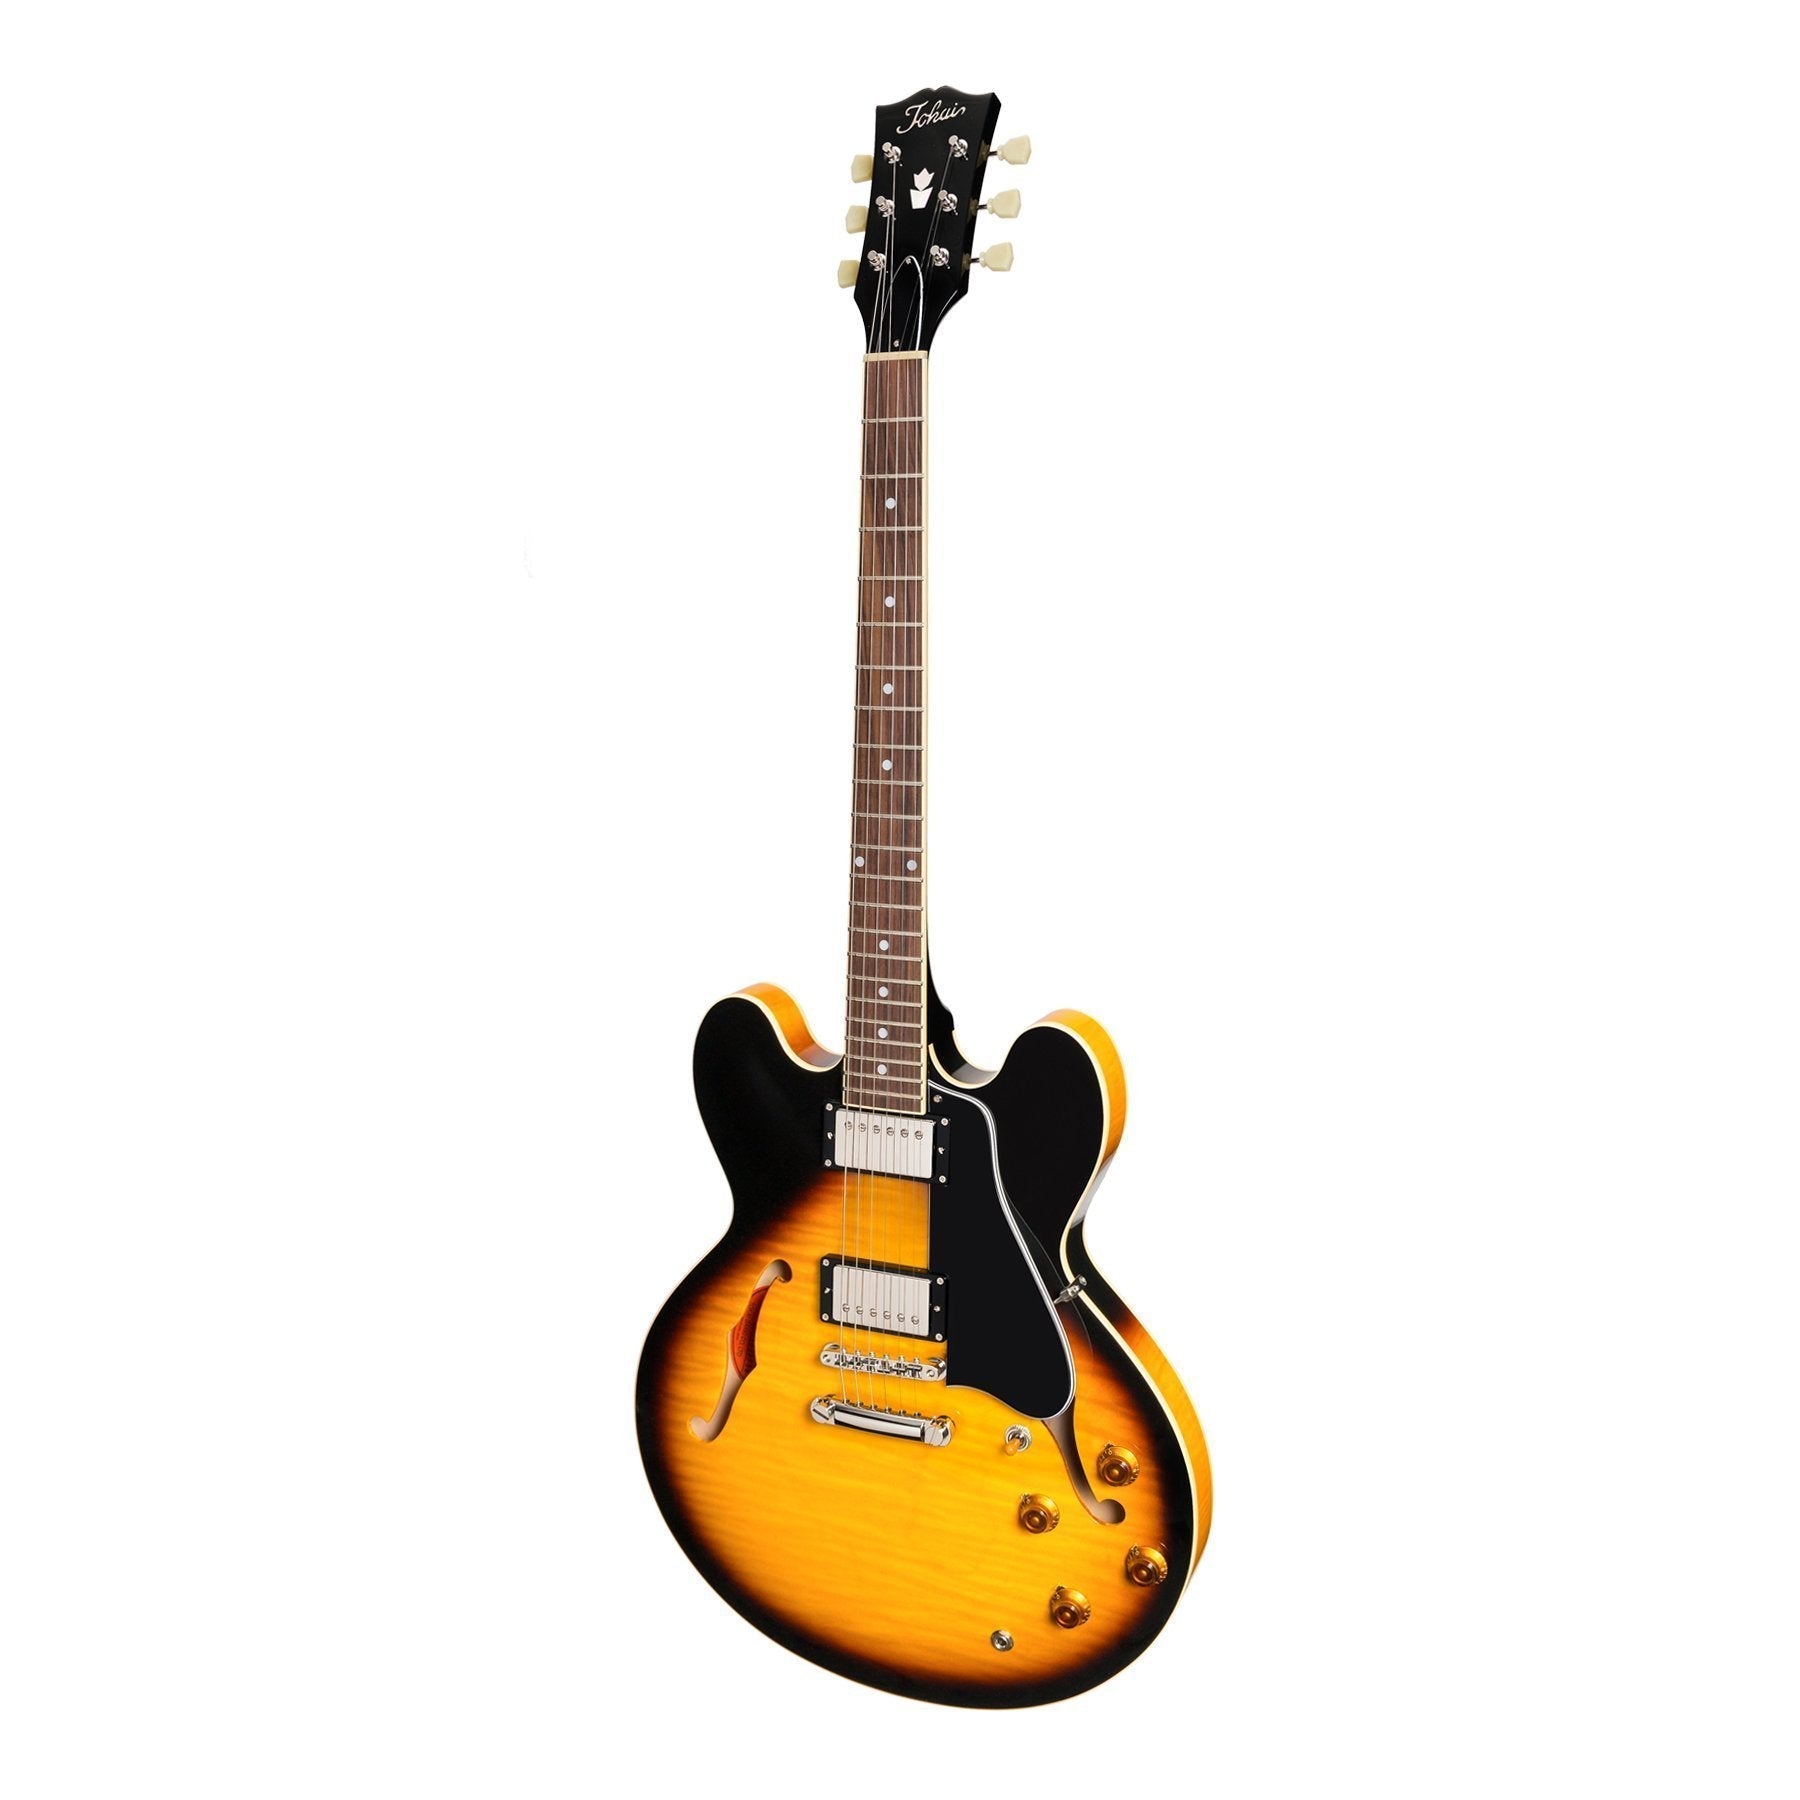 https://cdn.shopify.com/s/files/1/1636/6967/products/Tokai-Vintage-Series-ES-158-ES-Style-Electric-Guitar-Sunburst-ES-158-SB_8bb5002d-1dad-4d97-8b6f-2420e5f442a3.jpg?v=1643139452